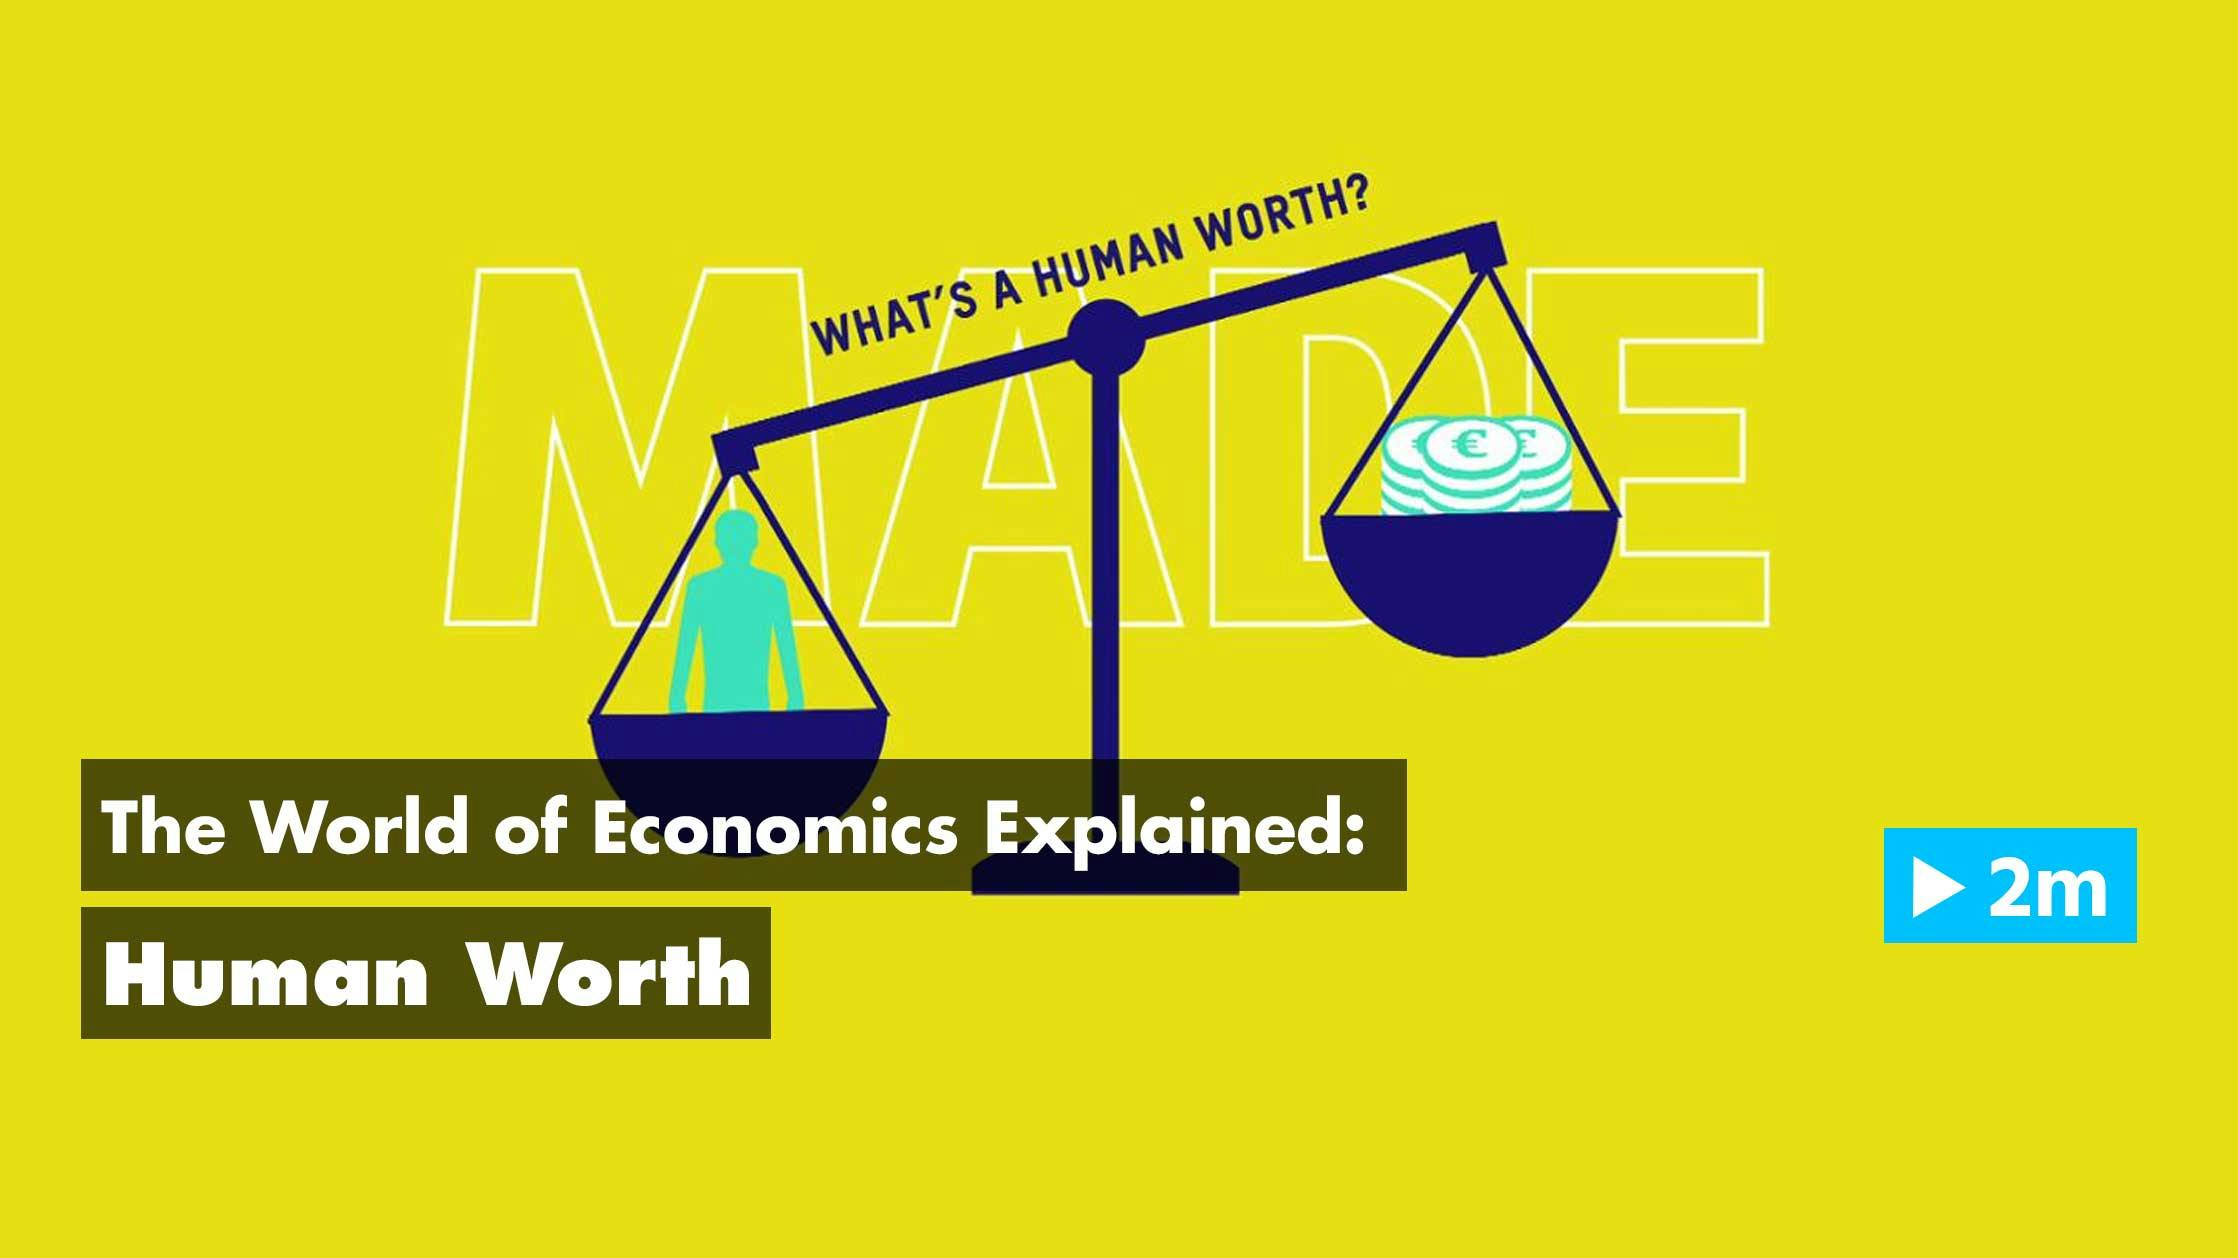 The World of Economics Explained: Human worth